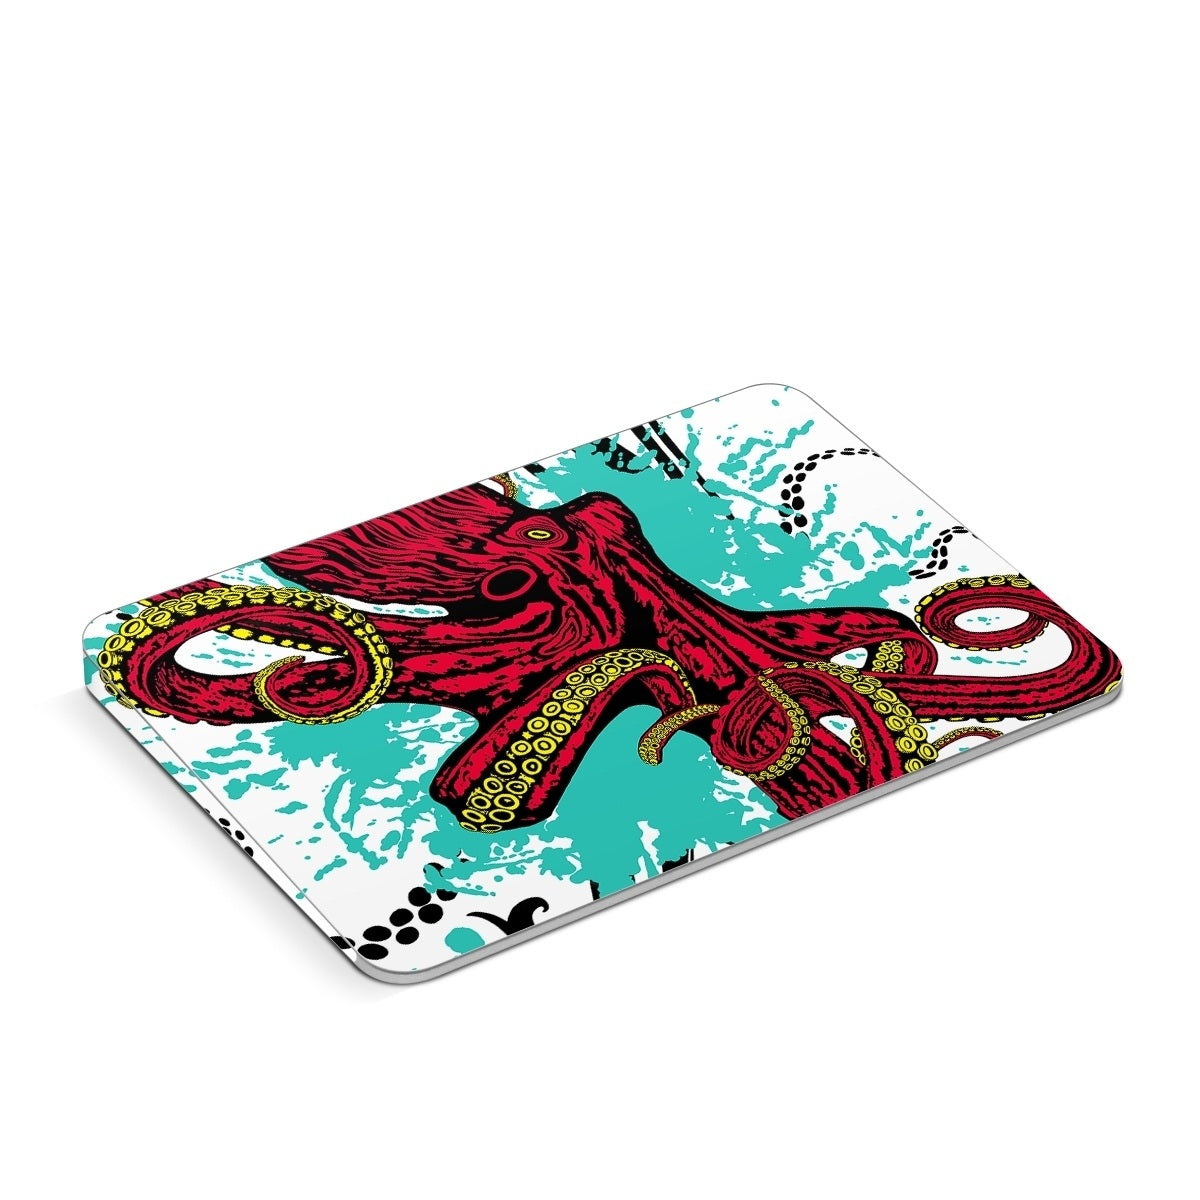 Octopus - Apple Magic Trackpad Skin